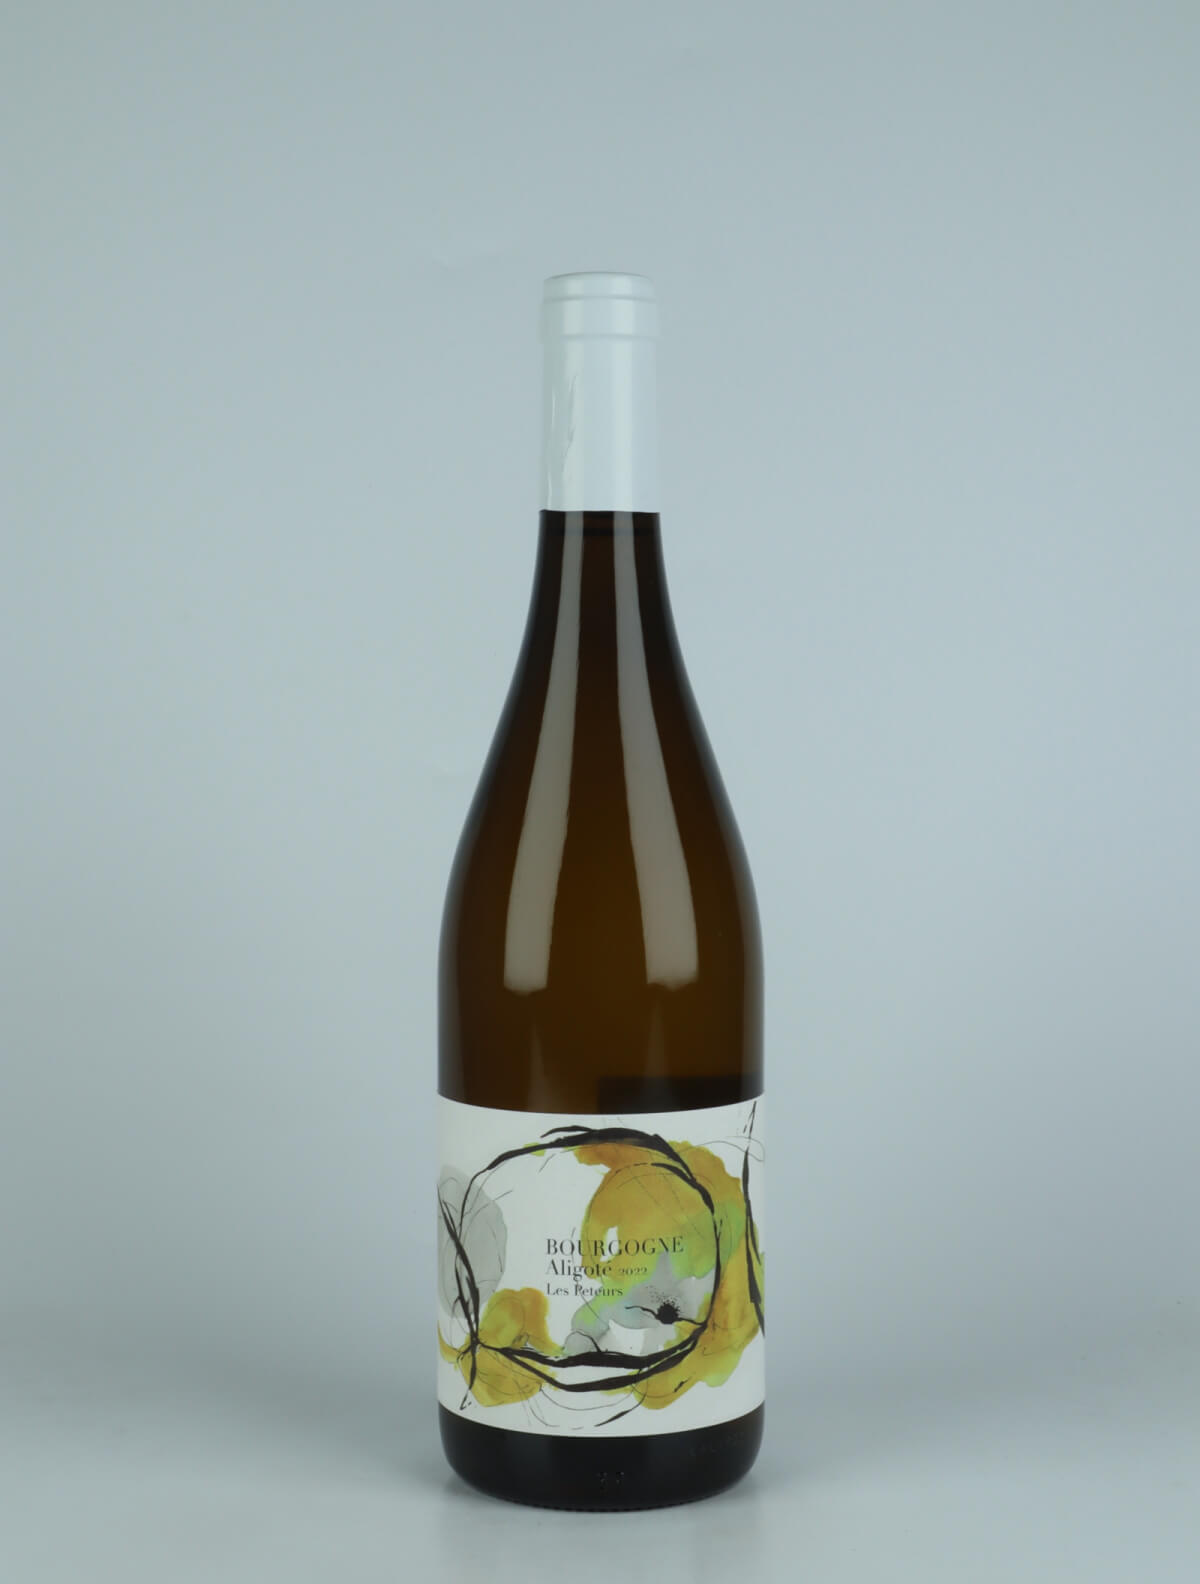 En flaske 2022 Bourgogne Aligoté - Les Peteurs Hvidvin fra Domaine Didon, Bourgogne i Frankrig